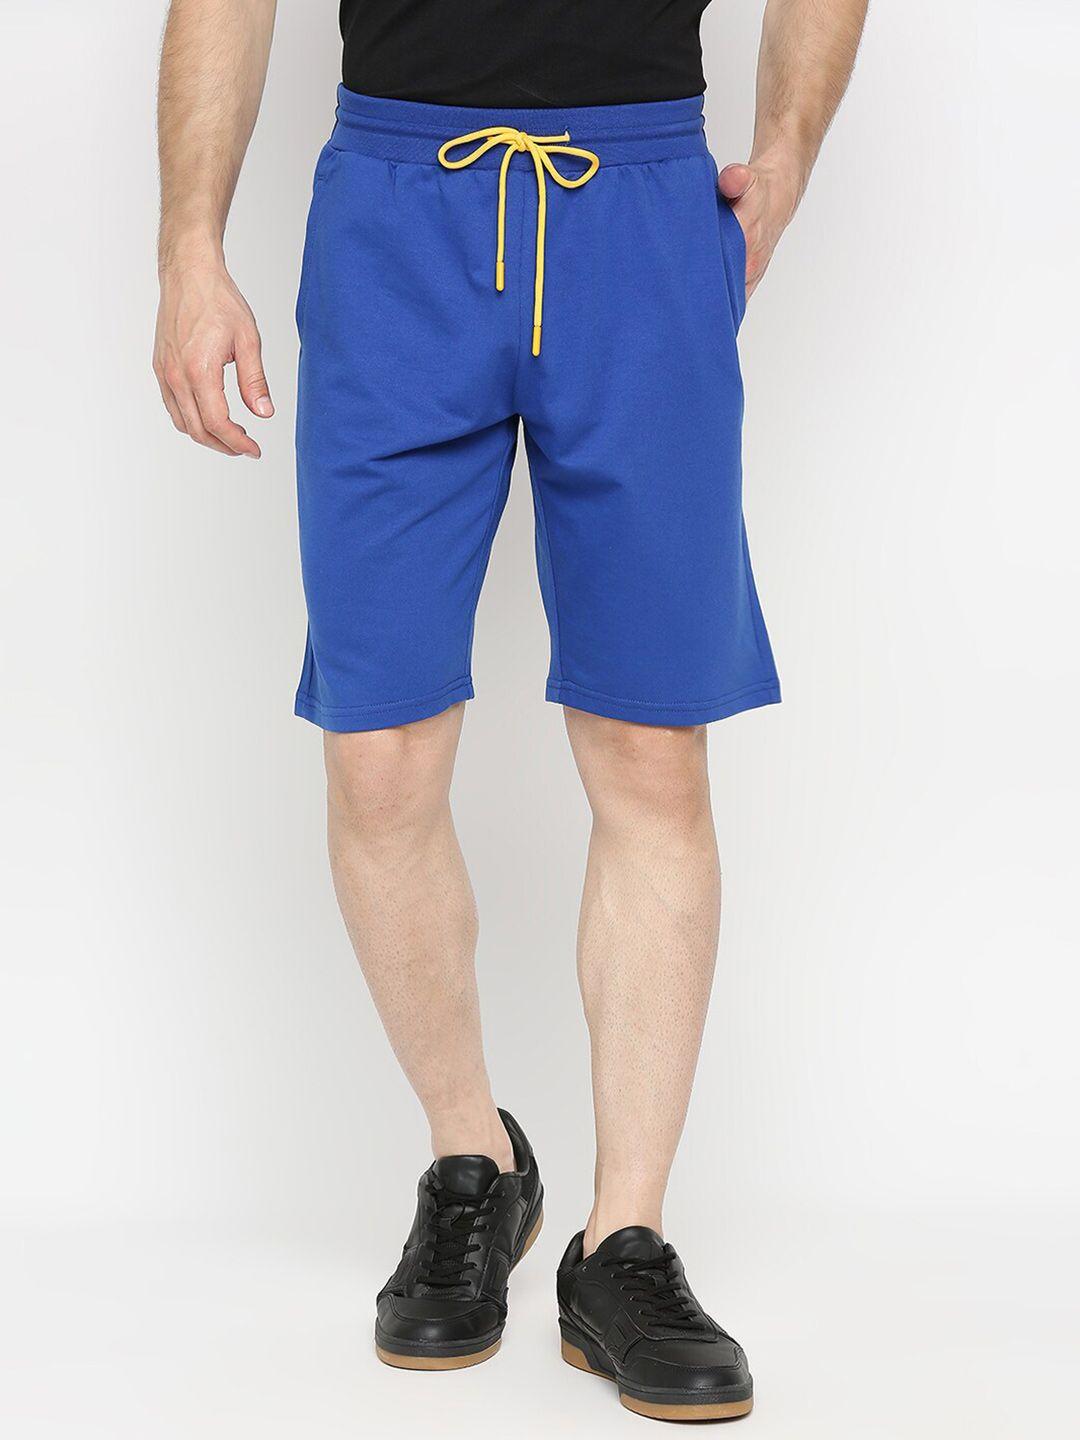 underjeans-by-spykar-men-blue-solid-shorts